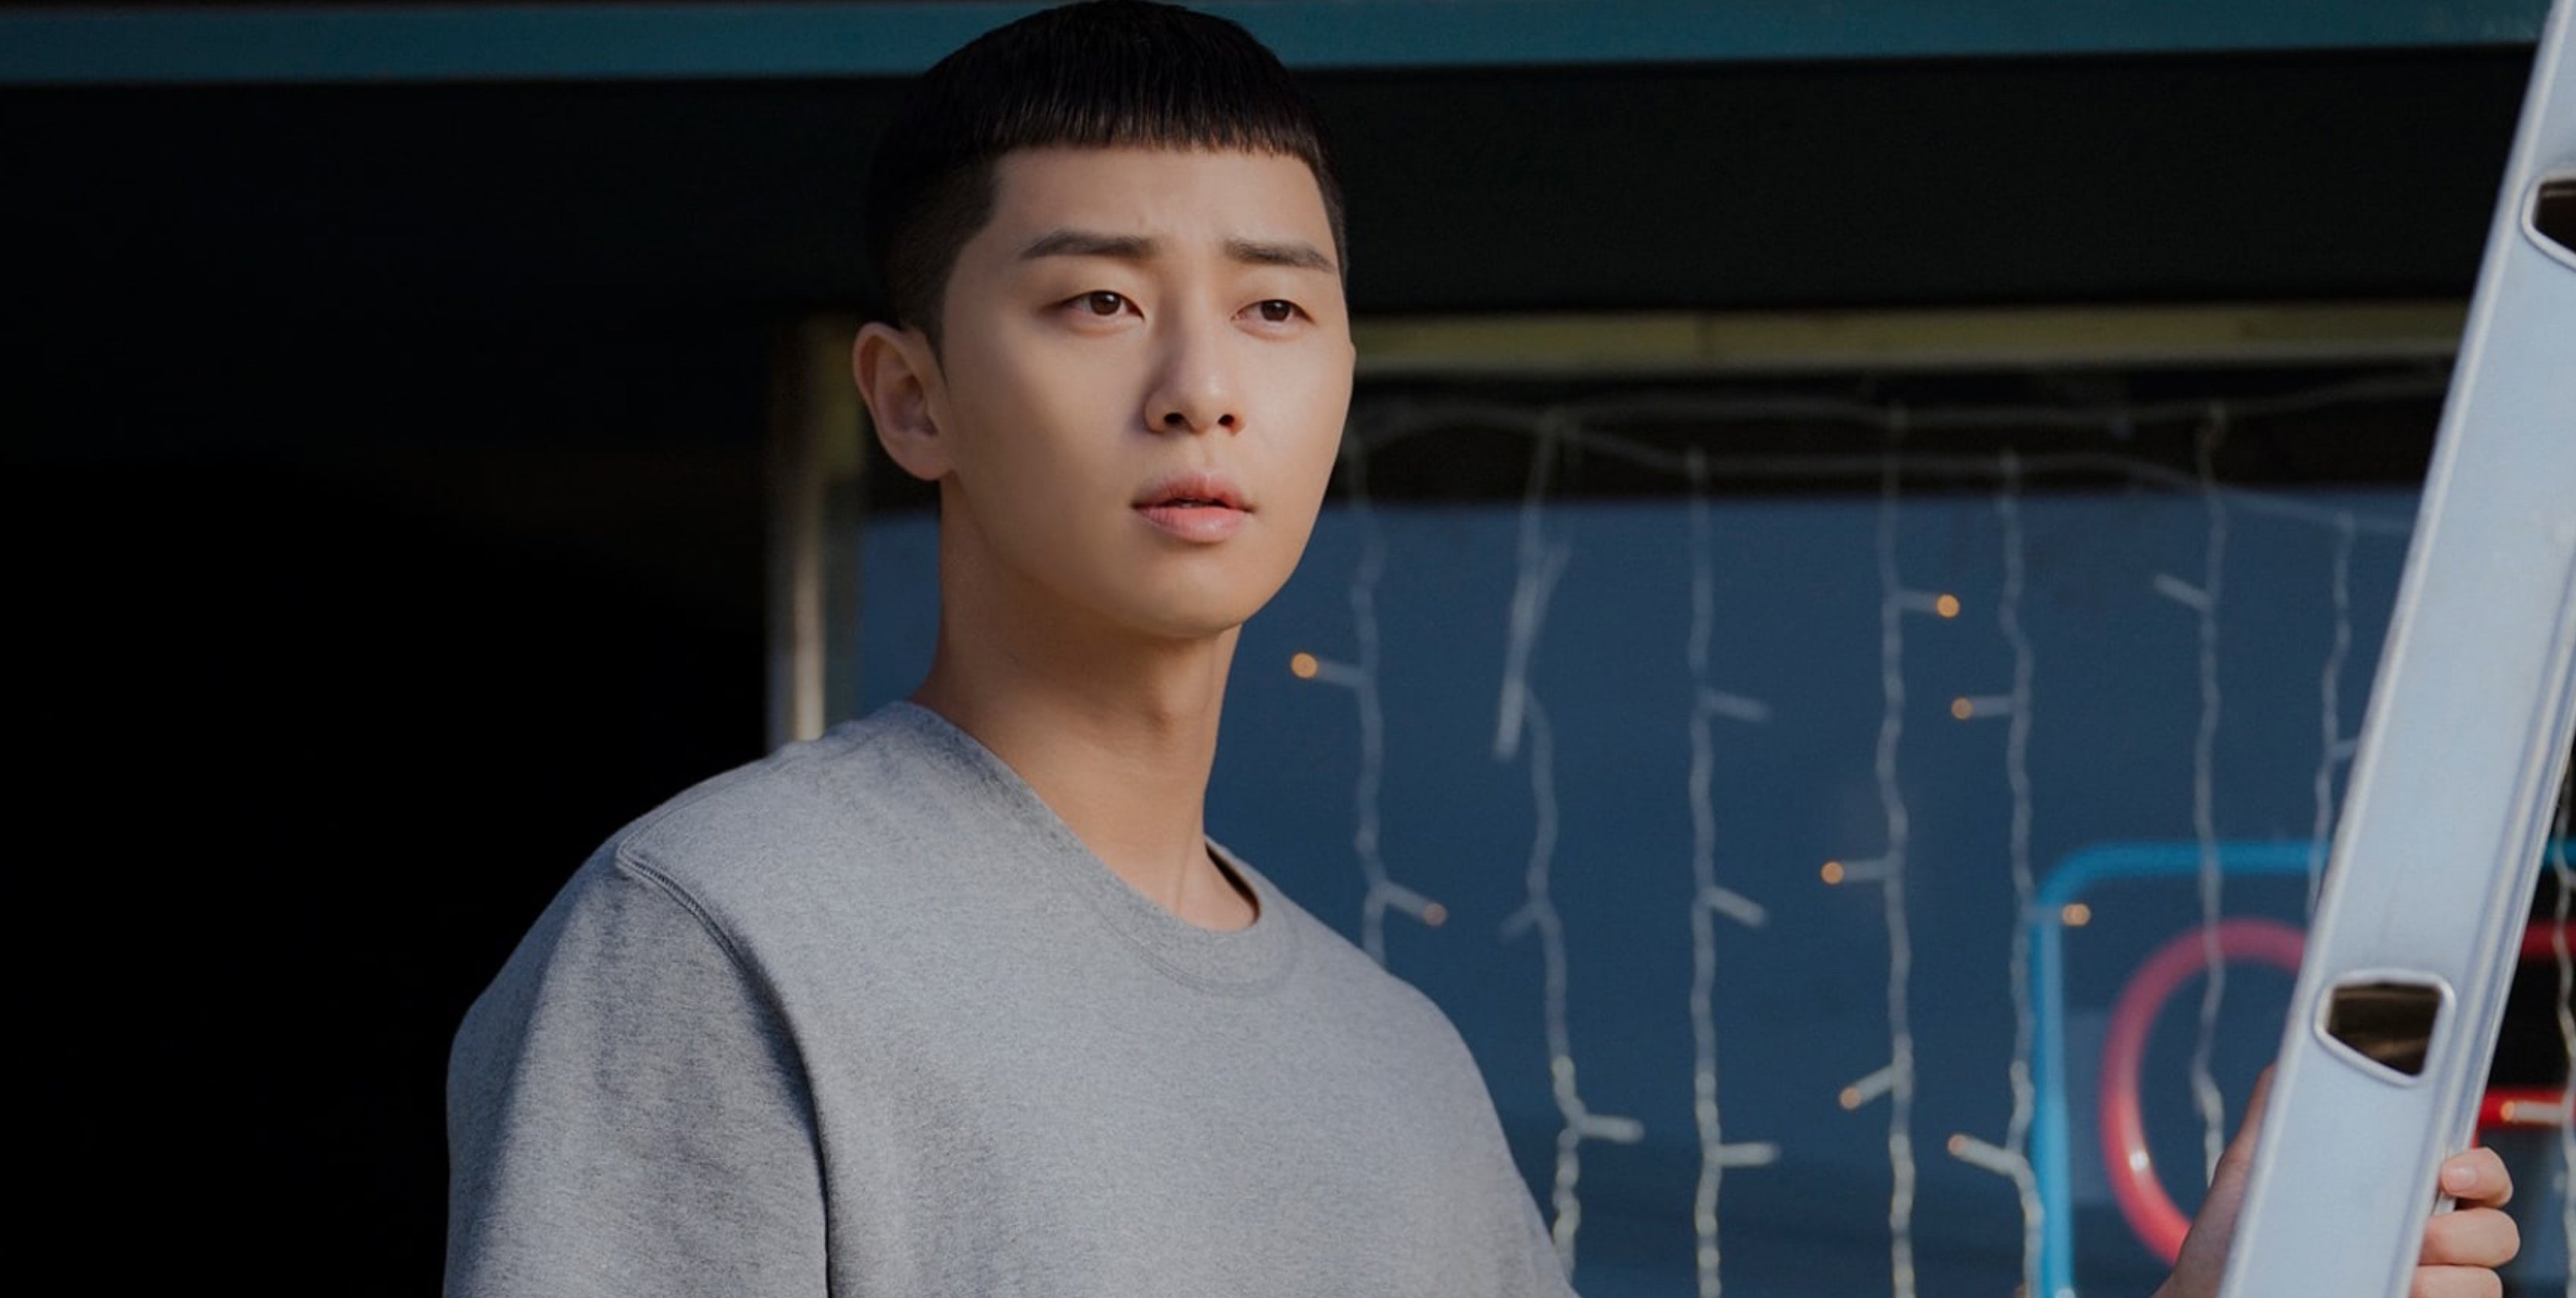 Park Seo-Joon in 'Itaewon Class' K-drama with short haircut in grey t-shirt